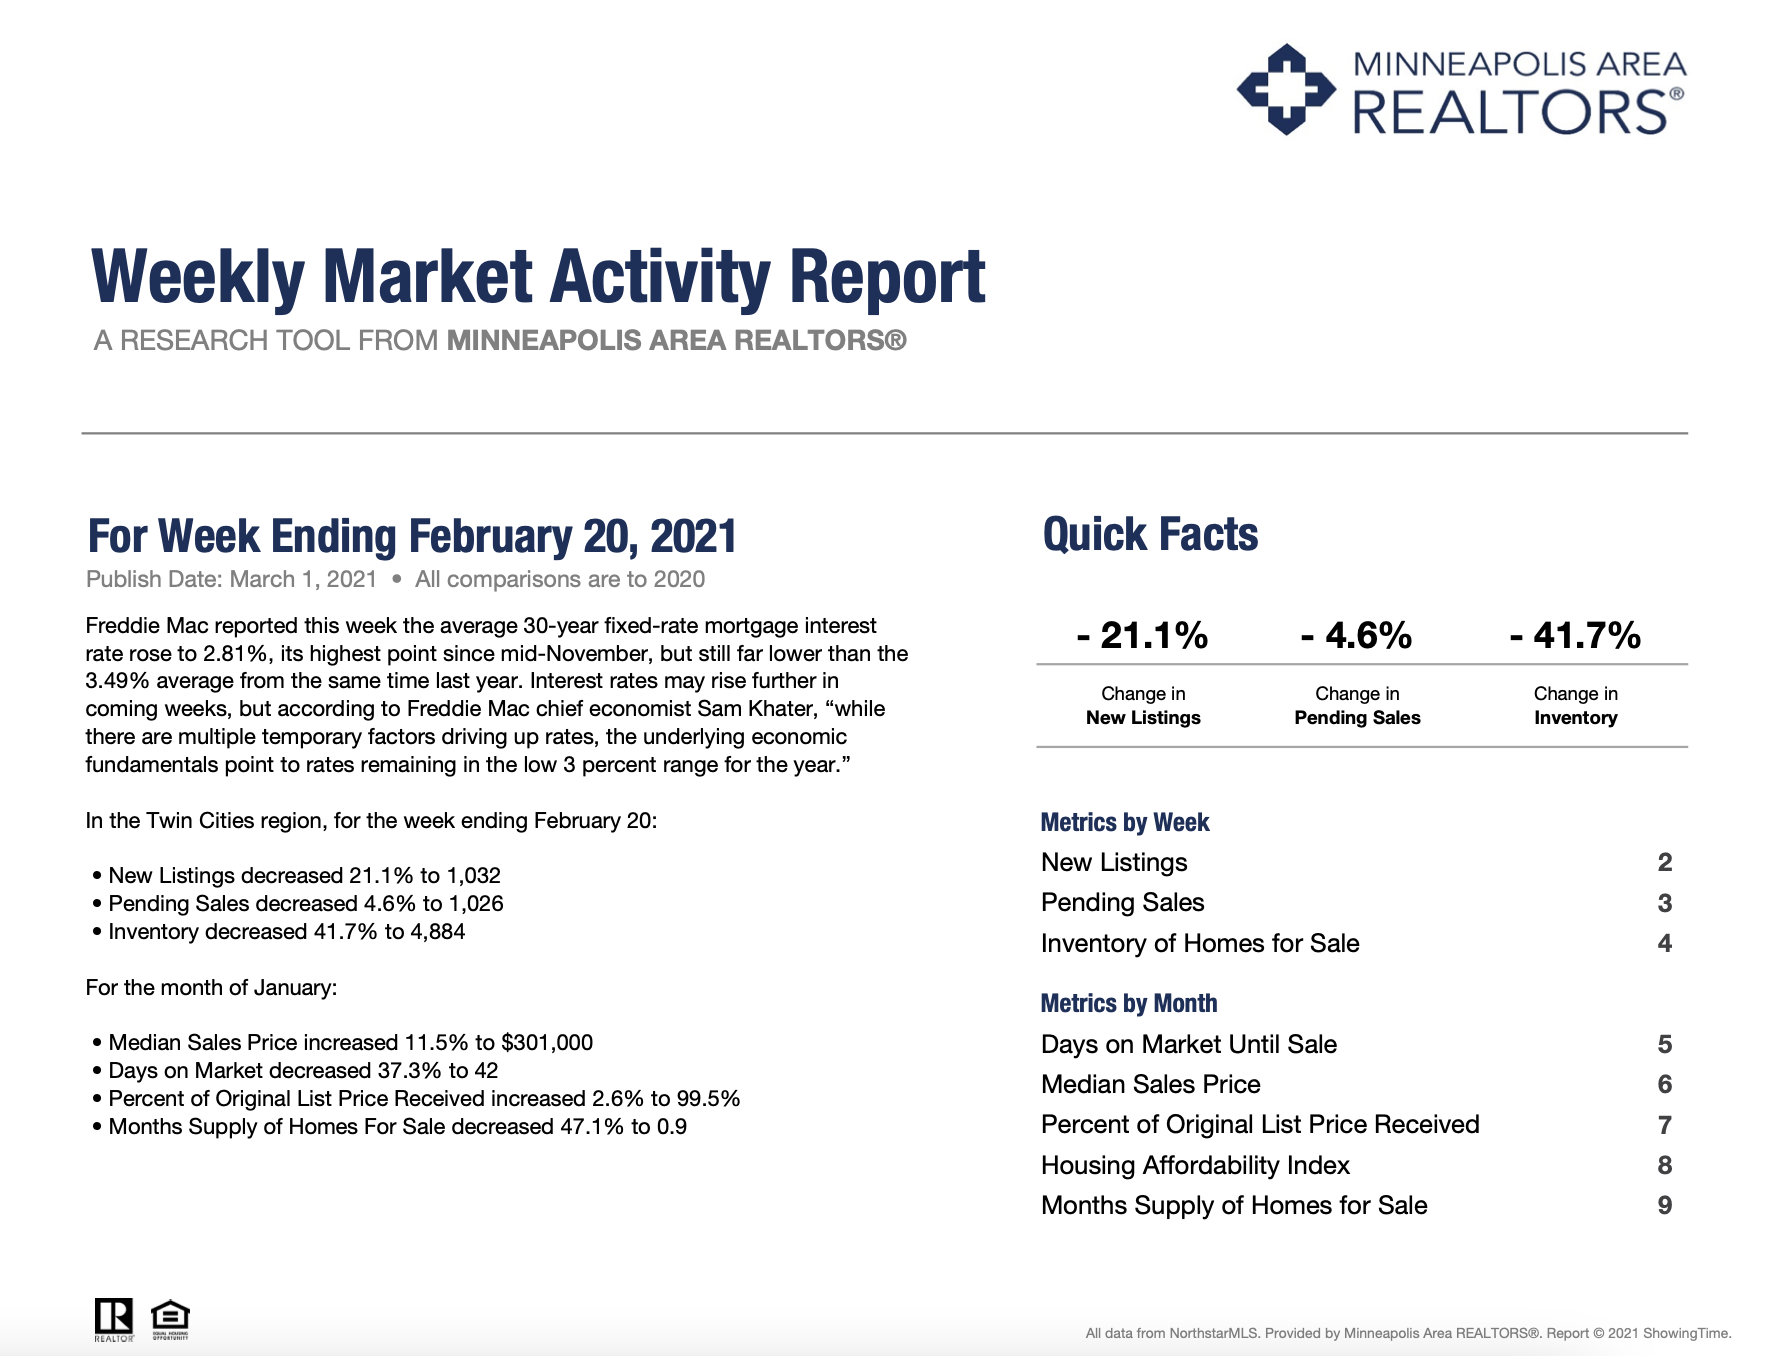 Your Weekly Market Activity Report